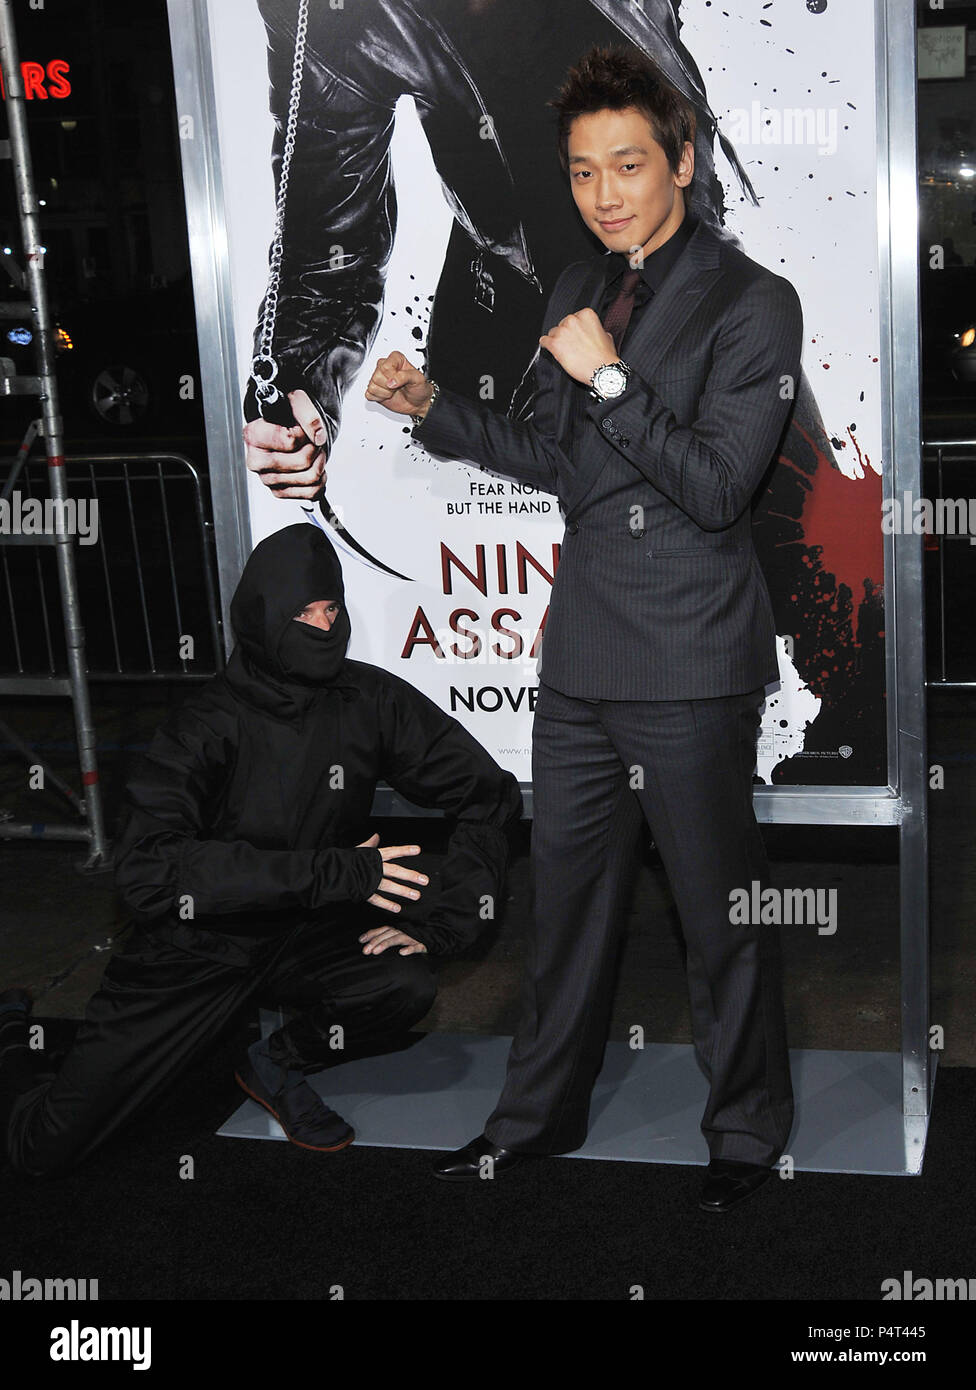 Raizo vs Ninja squad. Fight scene. Ninja Assassin 2009 